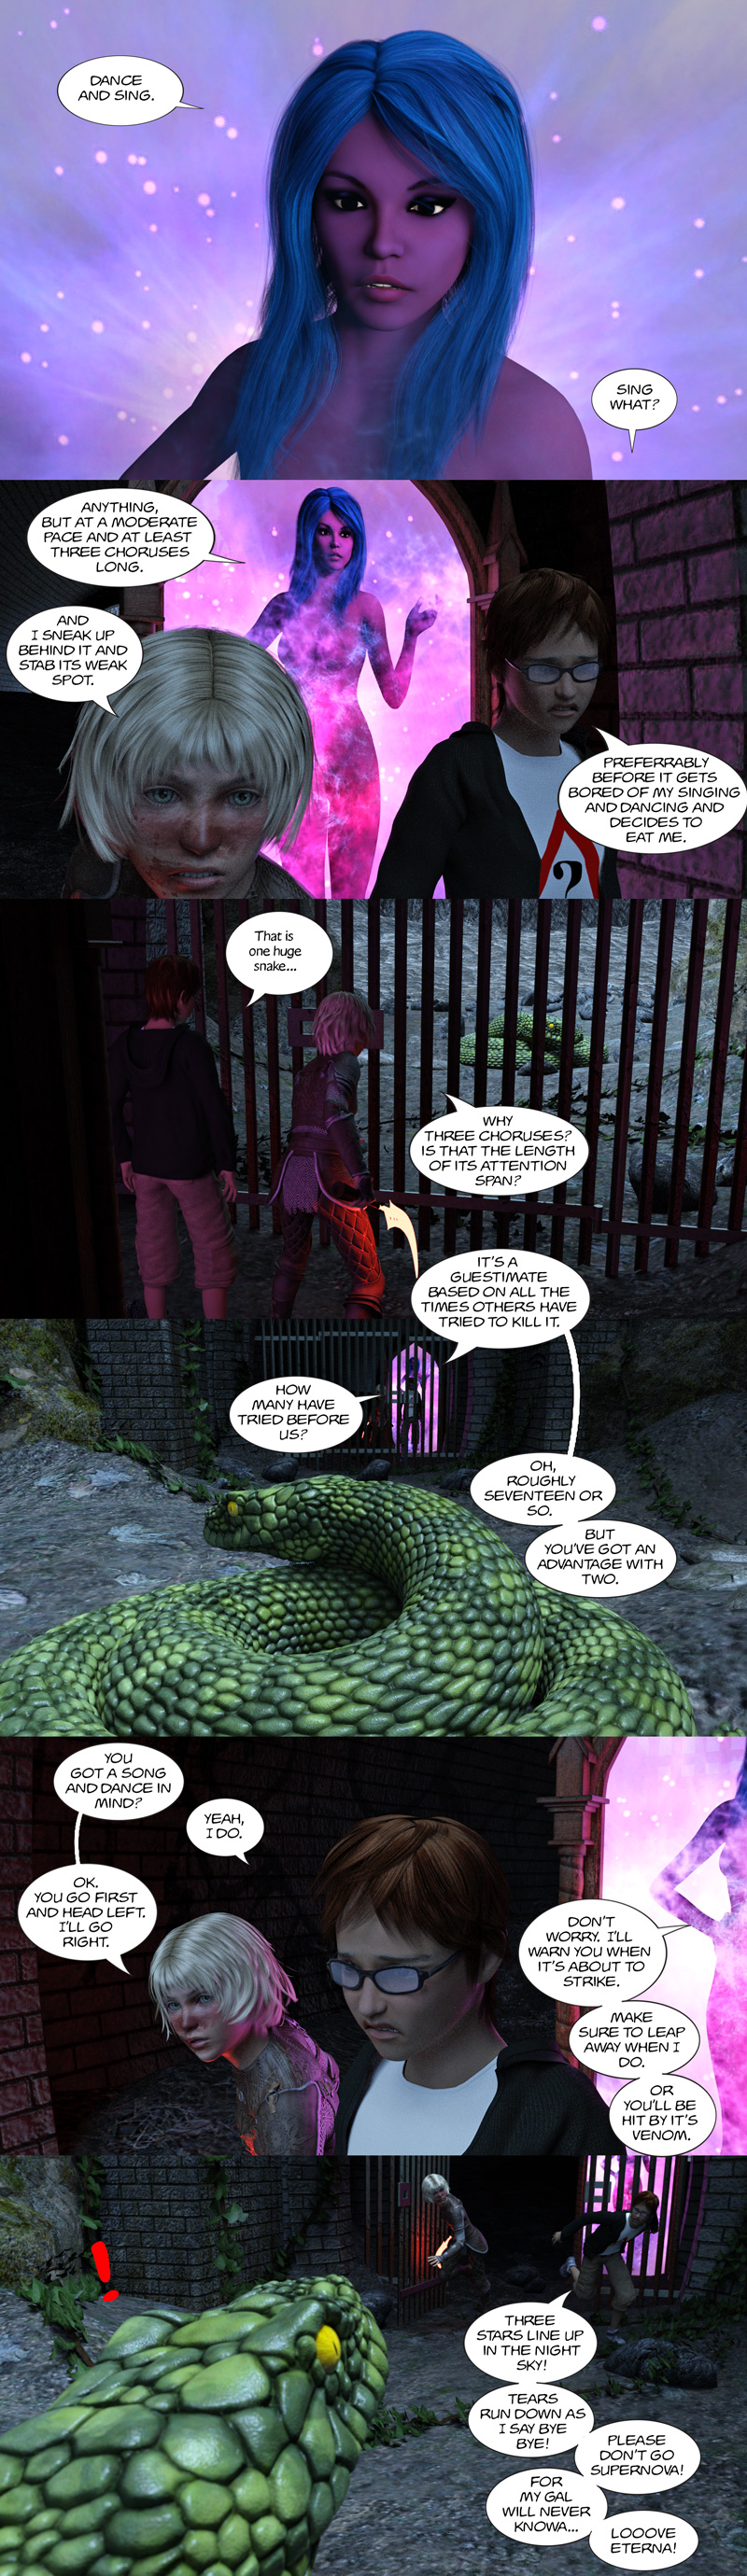 Chapter 13, page 2 – next challenge: gigantic serpent